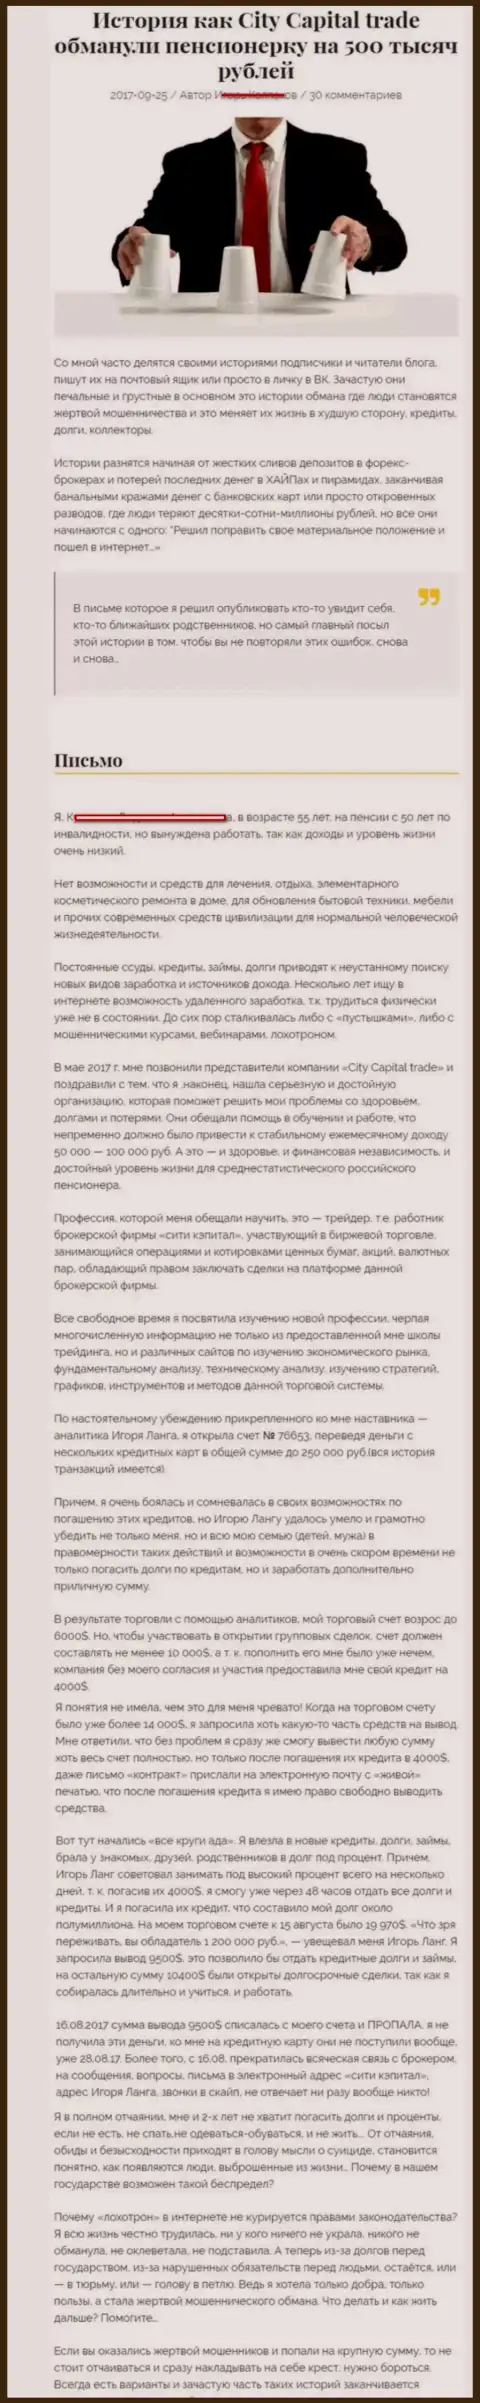 СитиКапитал Трейд обули клиентку на пенсии - инвалида на общую сумму 500 тыс. рублей - МОШЕННИКИ !!!